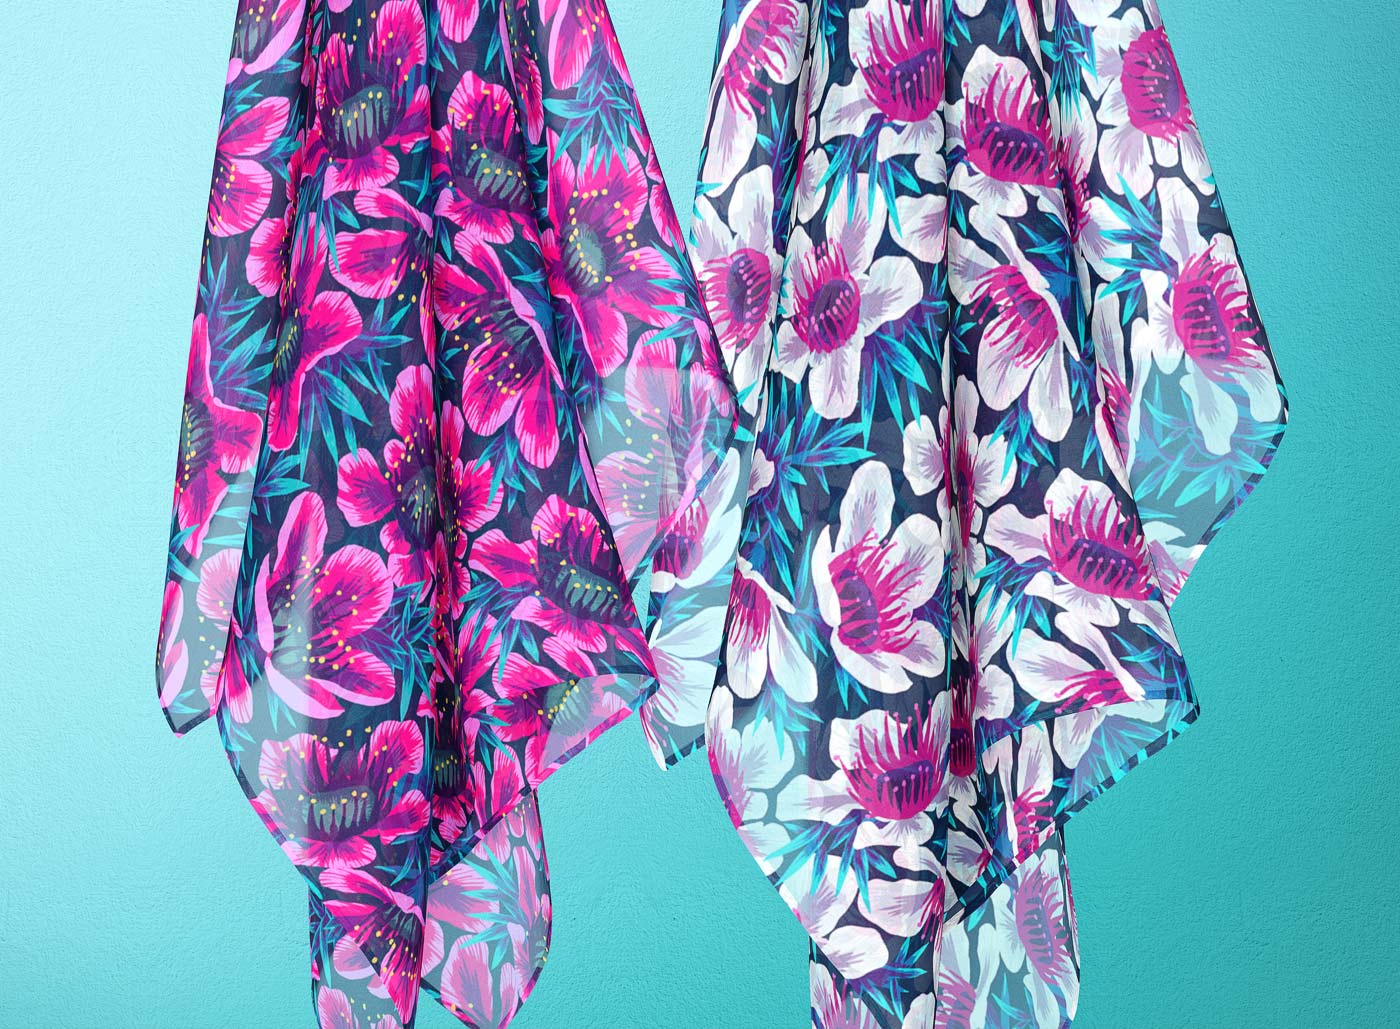 Manuka floral pattern chiffon scarfs by Andrea Muller